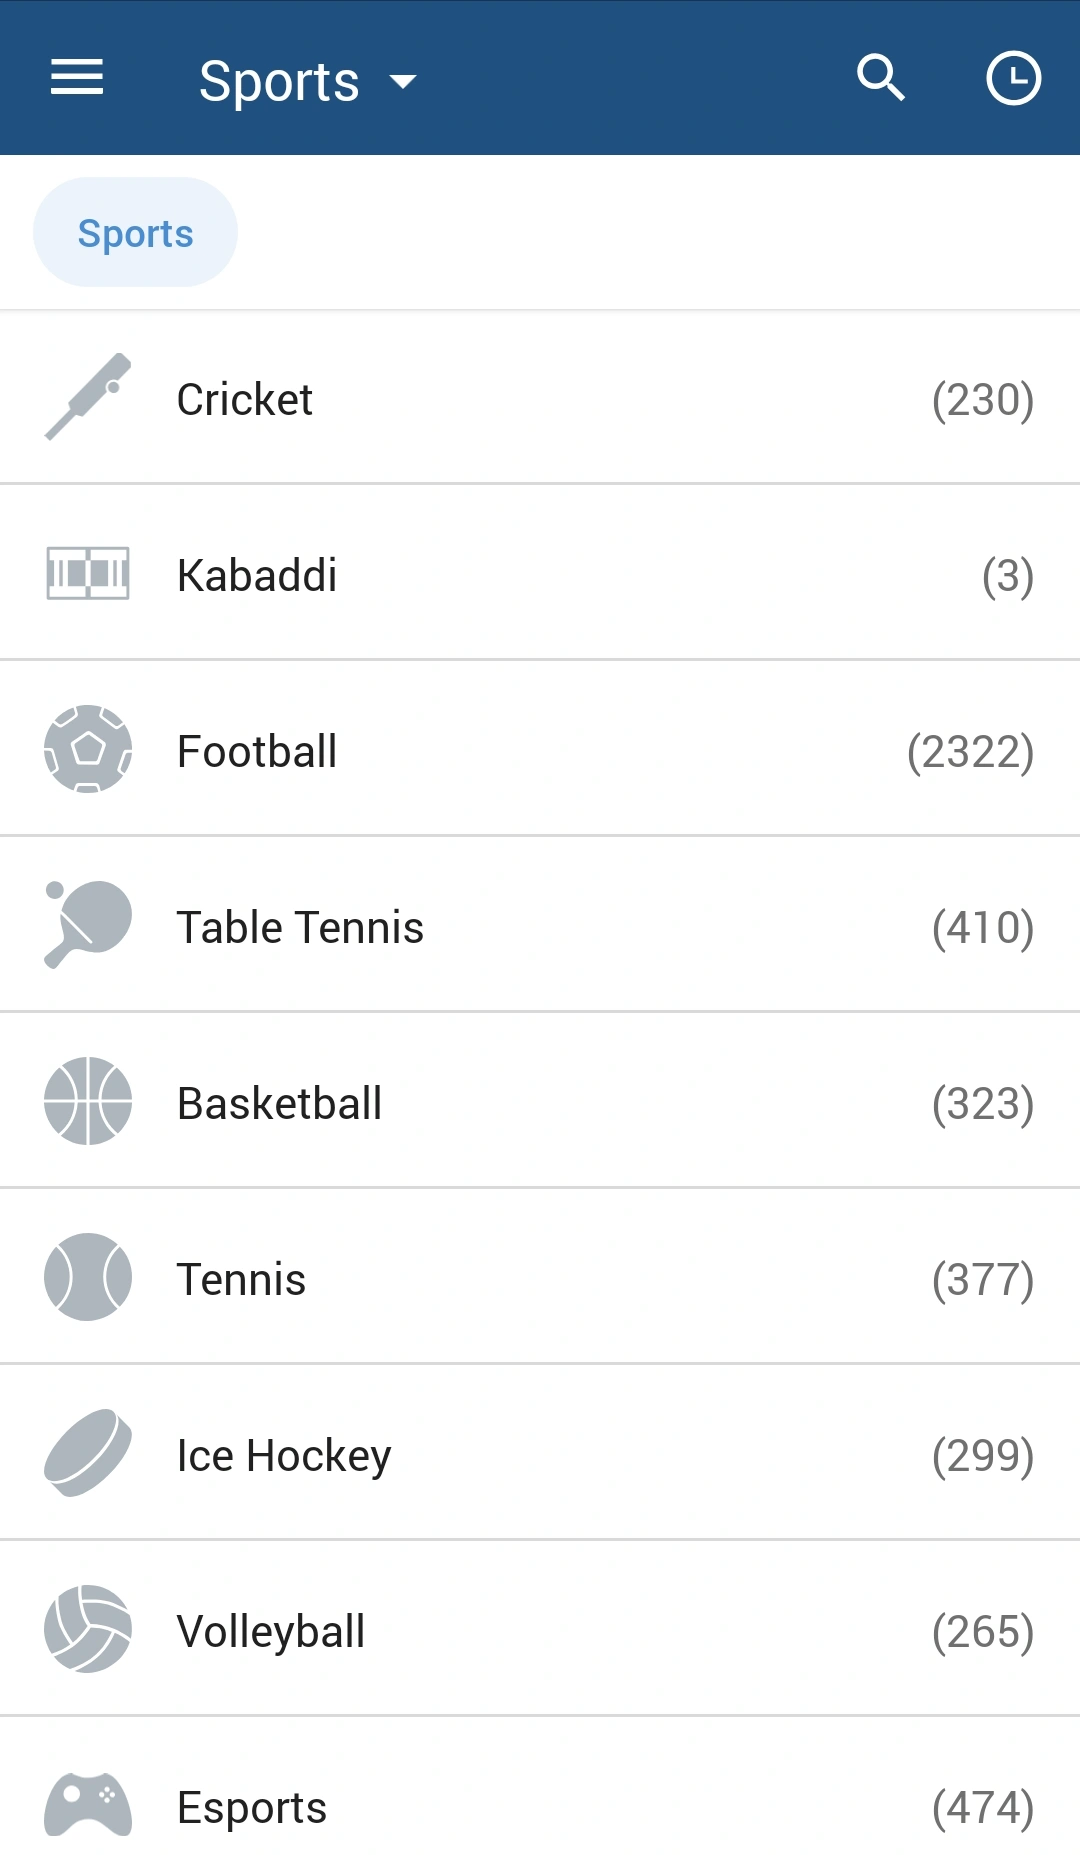 List of sports disciplines